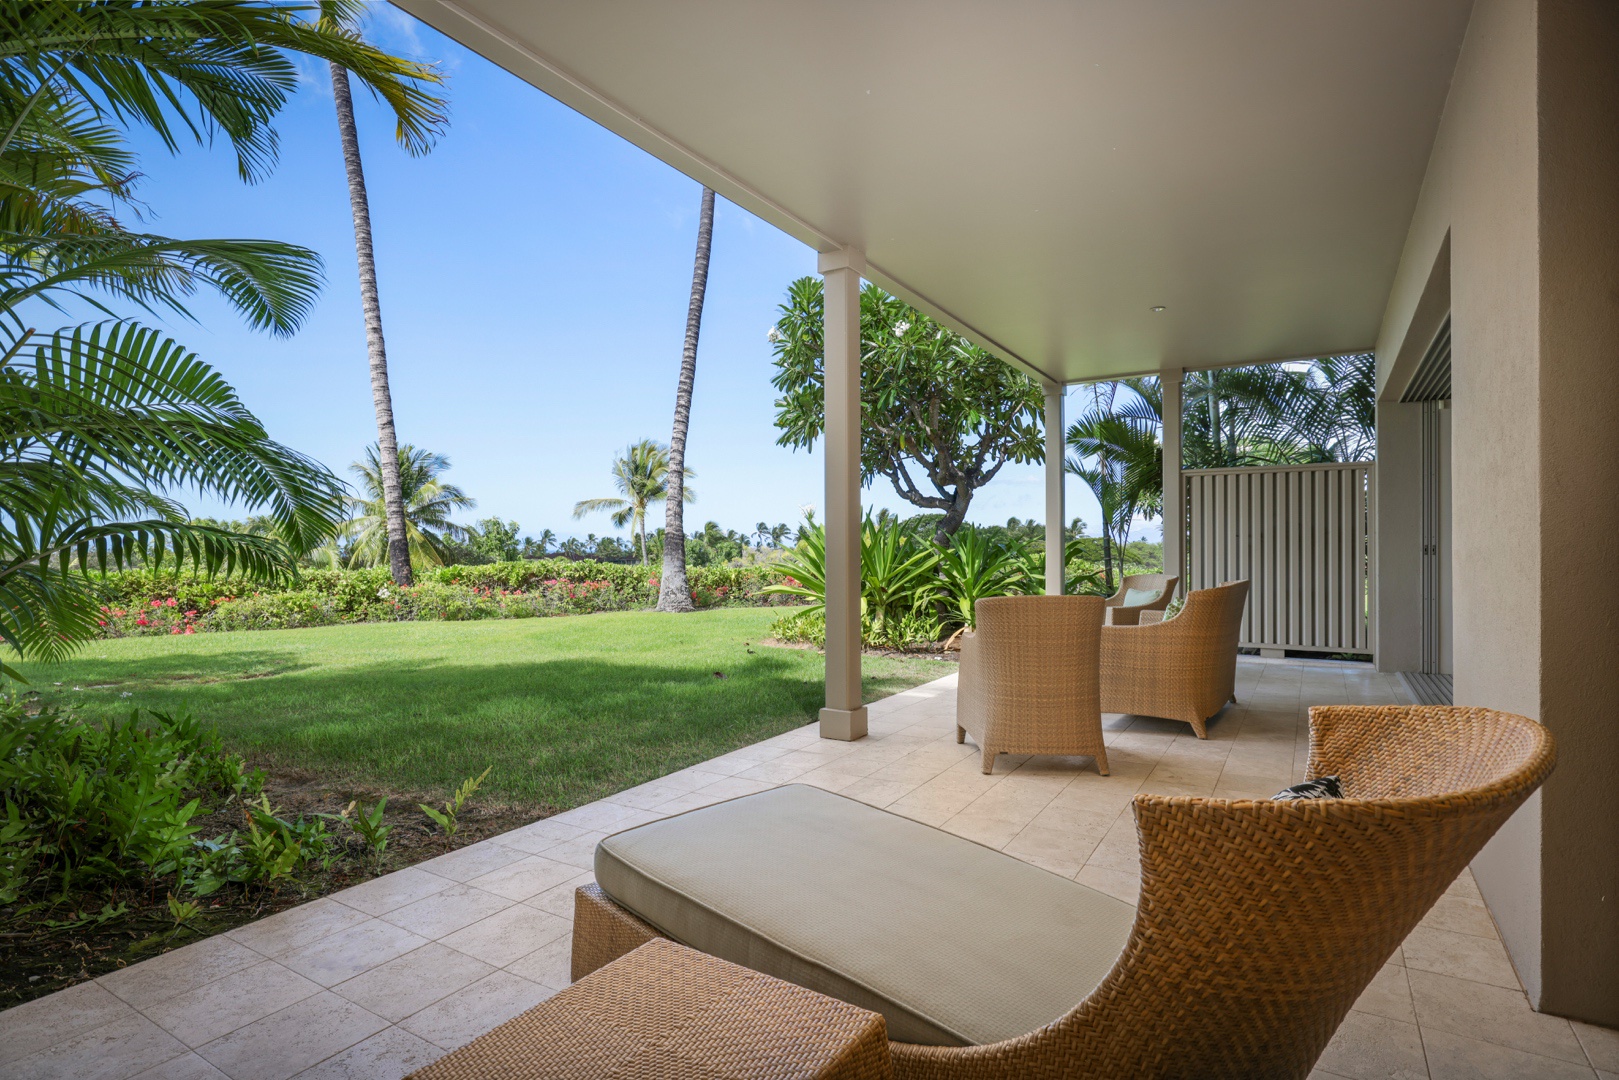 Kailua Kona Vacation Rentals, 3BD Ke Alaula Villa (210B) at Four Seasons Resort at Hualalai - Deck with lounger off primary bedroom suite showcasing expansive grassy lawn.